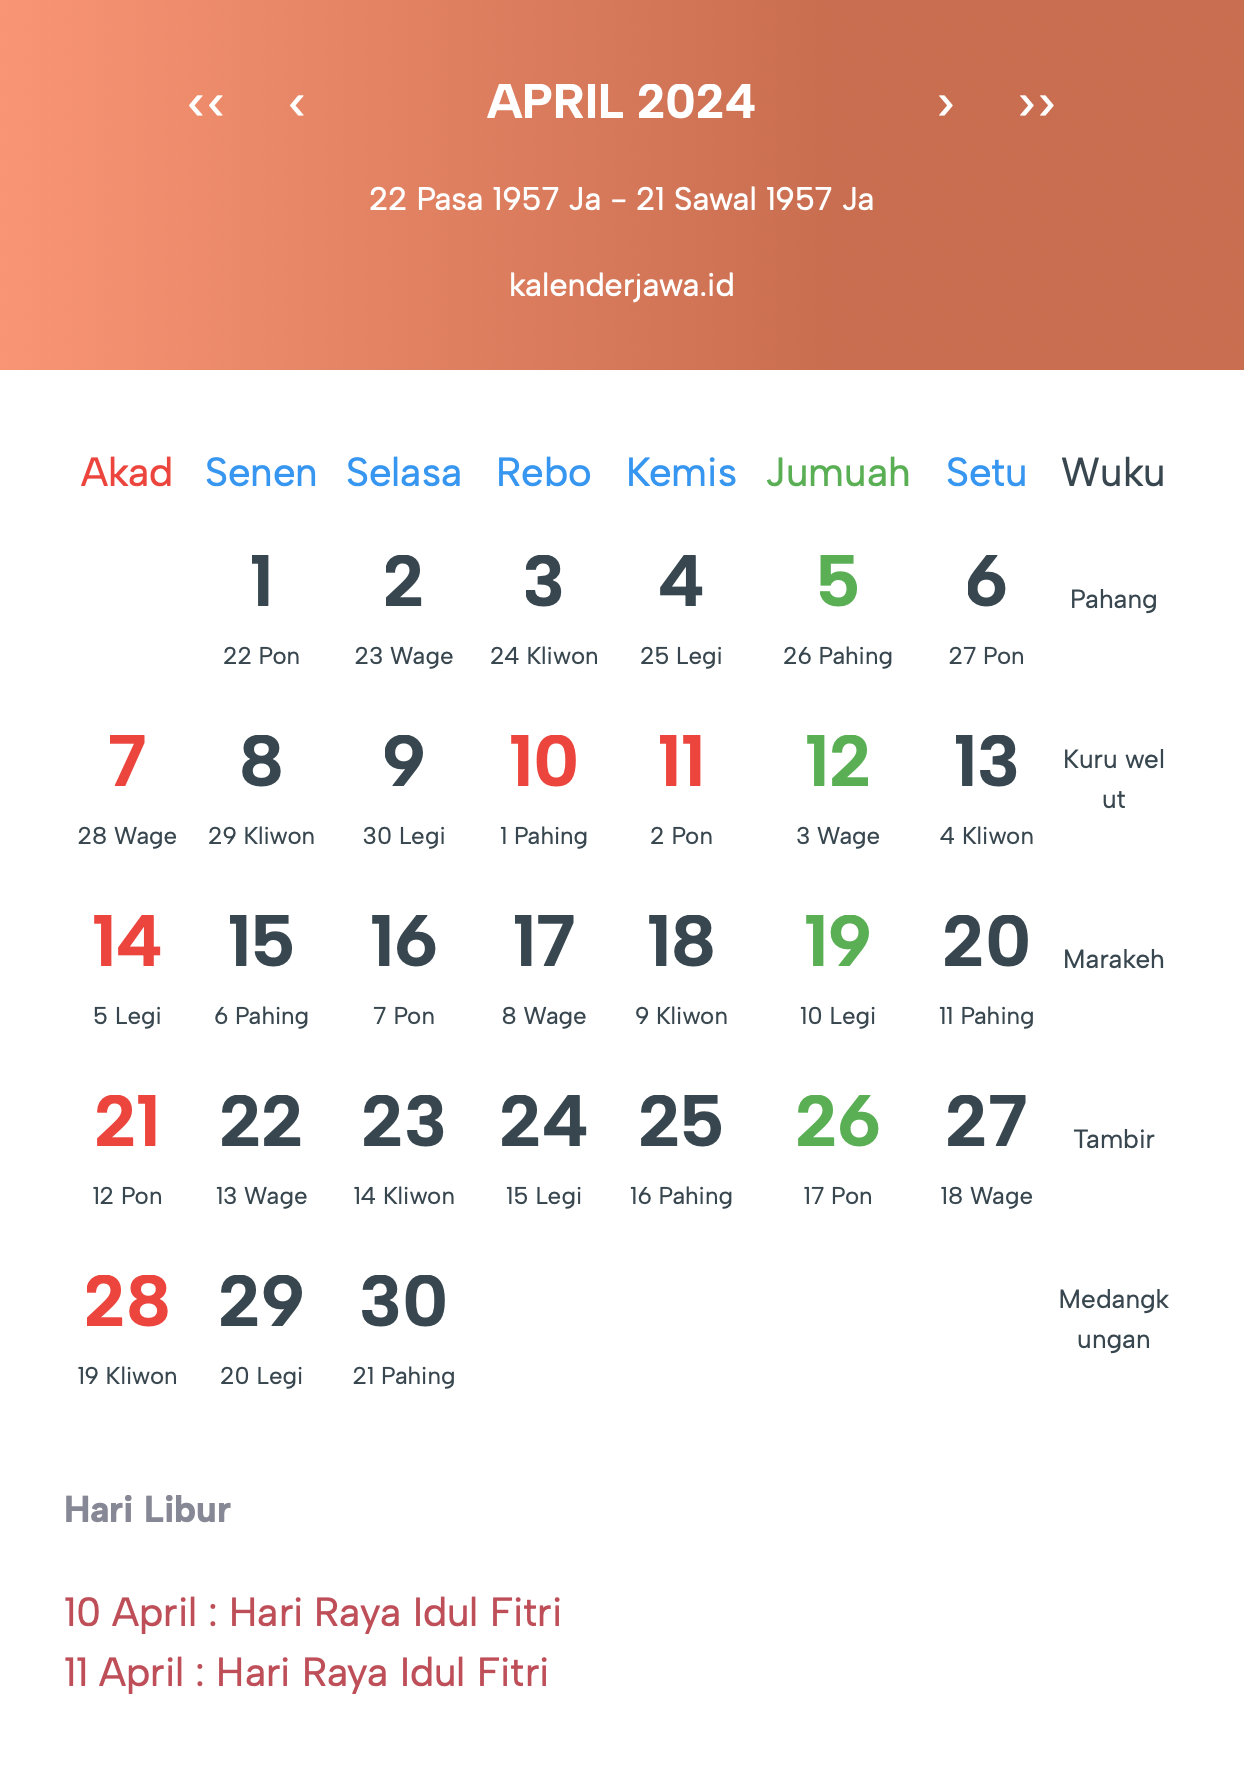 Gambar Kalender Jawa April 2024